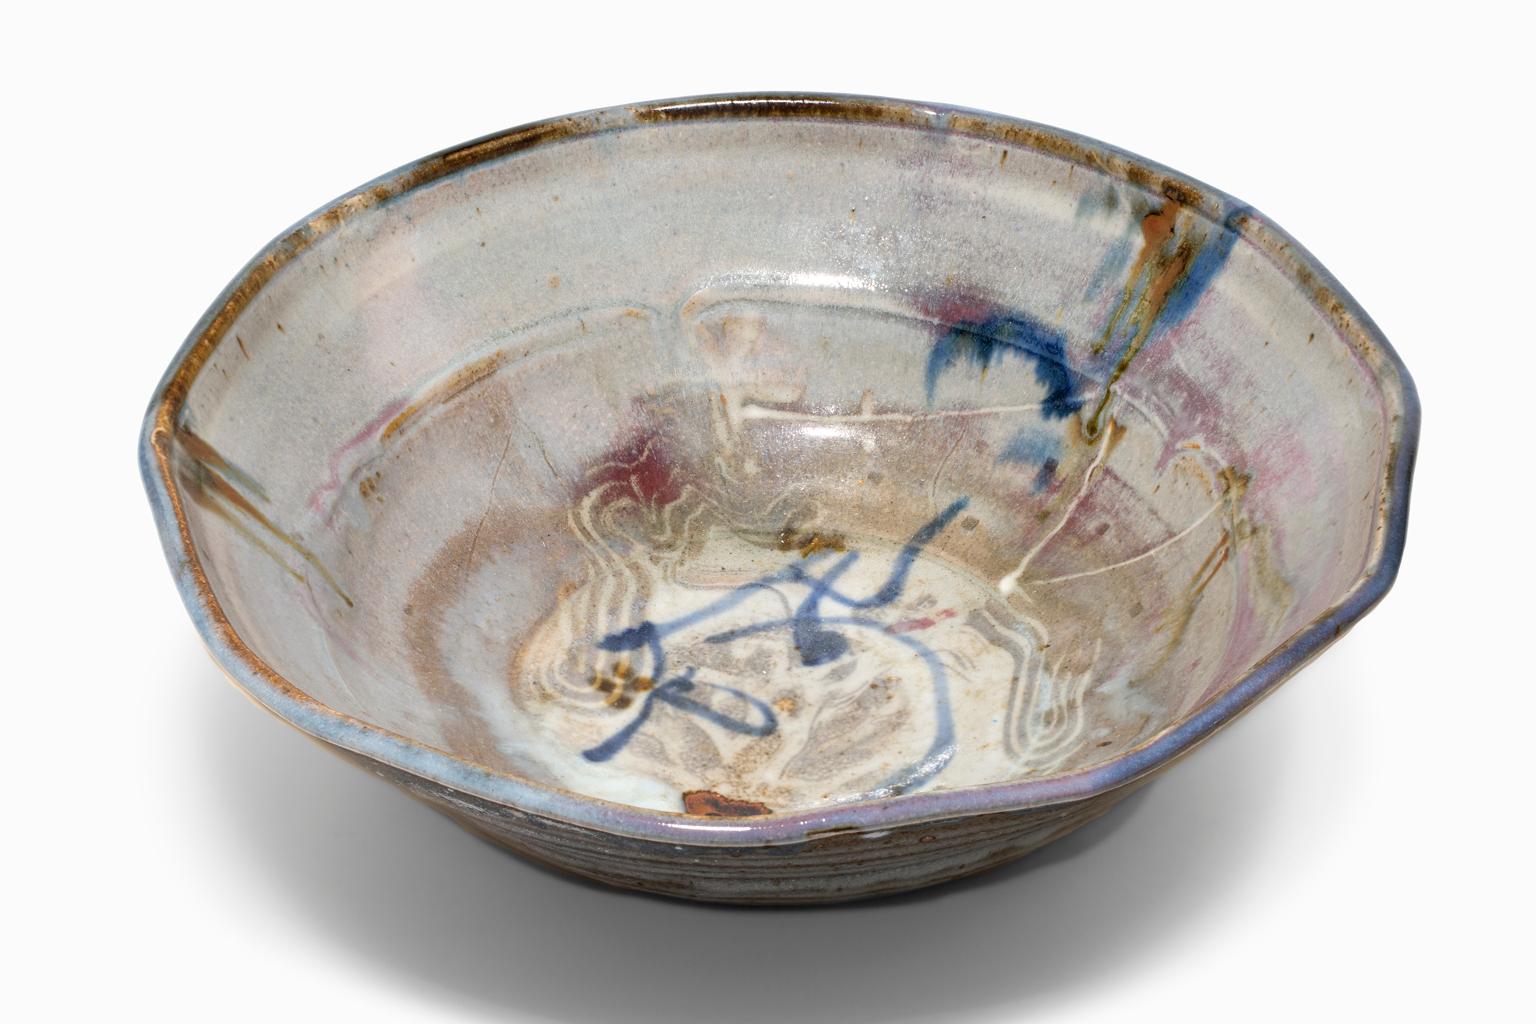 John Glick Plum Street Pottery Glazed Bowl Reduction Fired For Sale 1